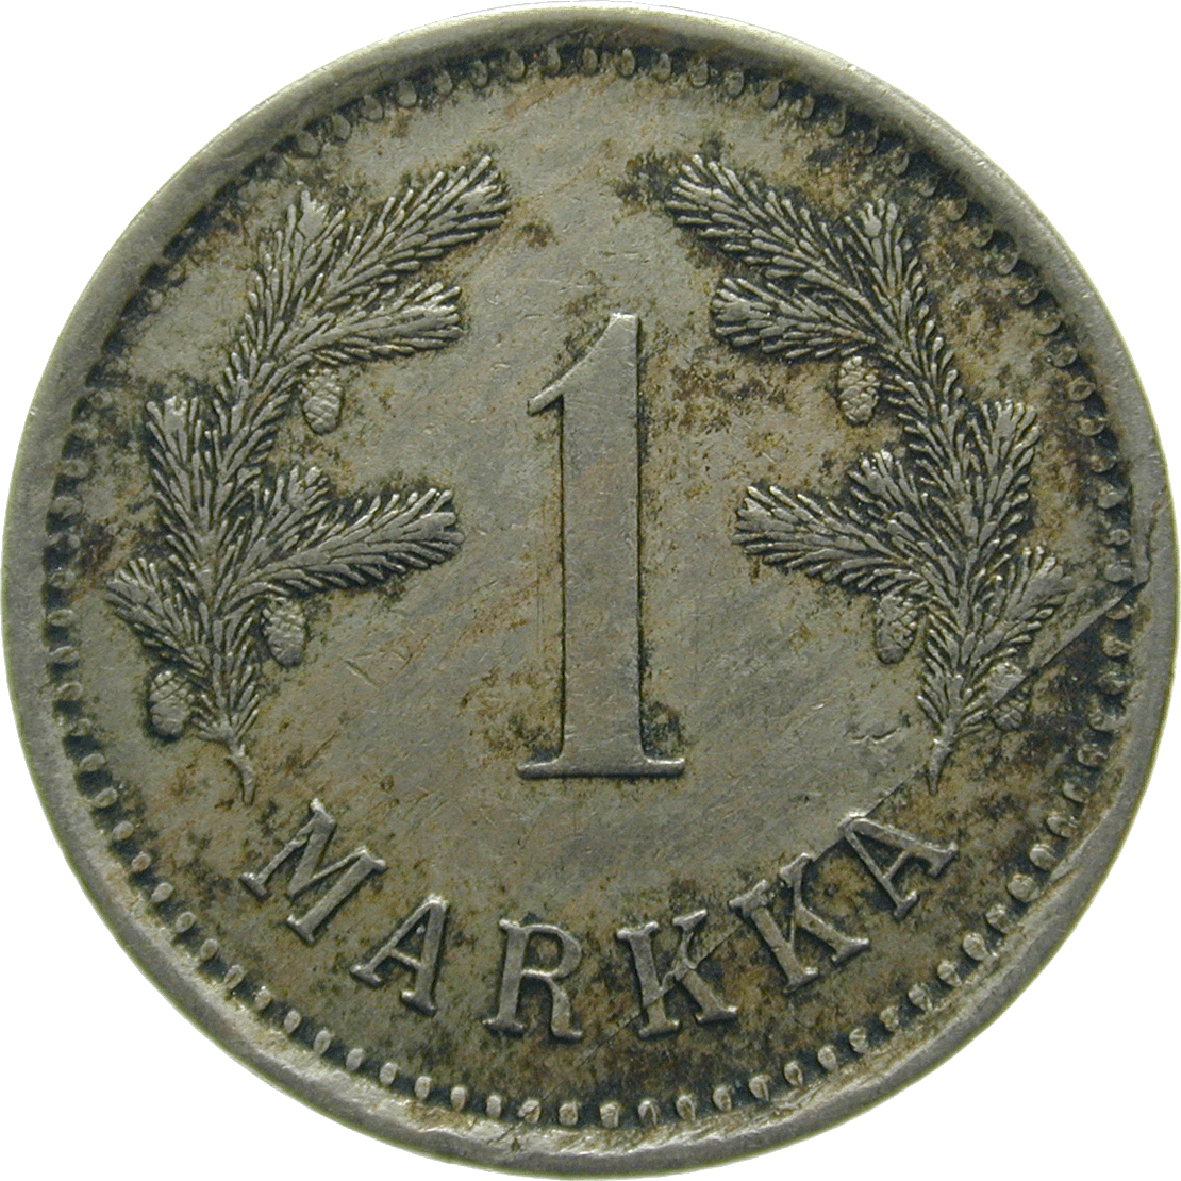 Republic of Finland, 1 Markka 1922 (reverse)